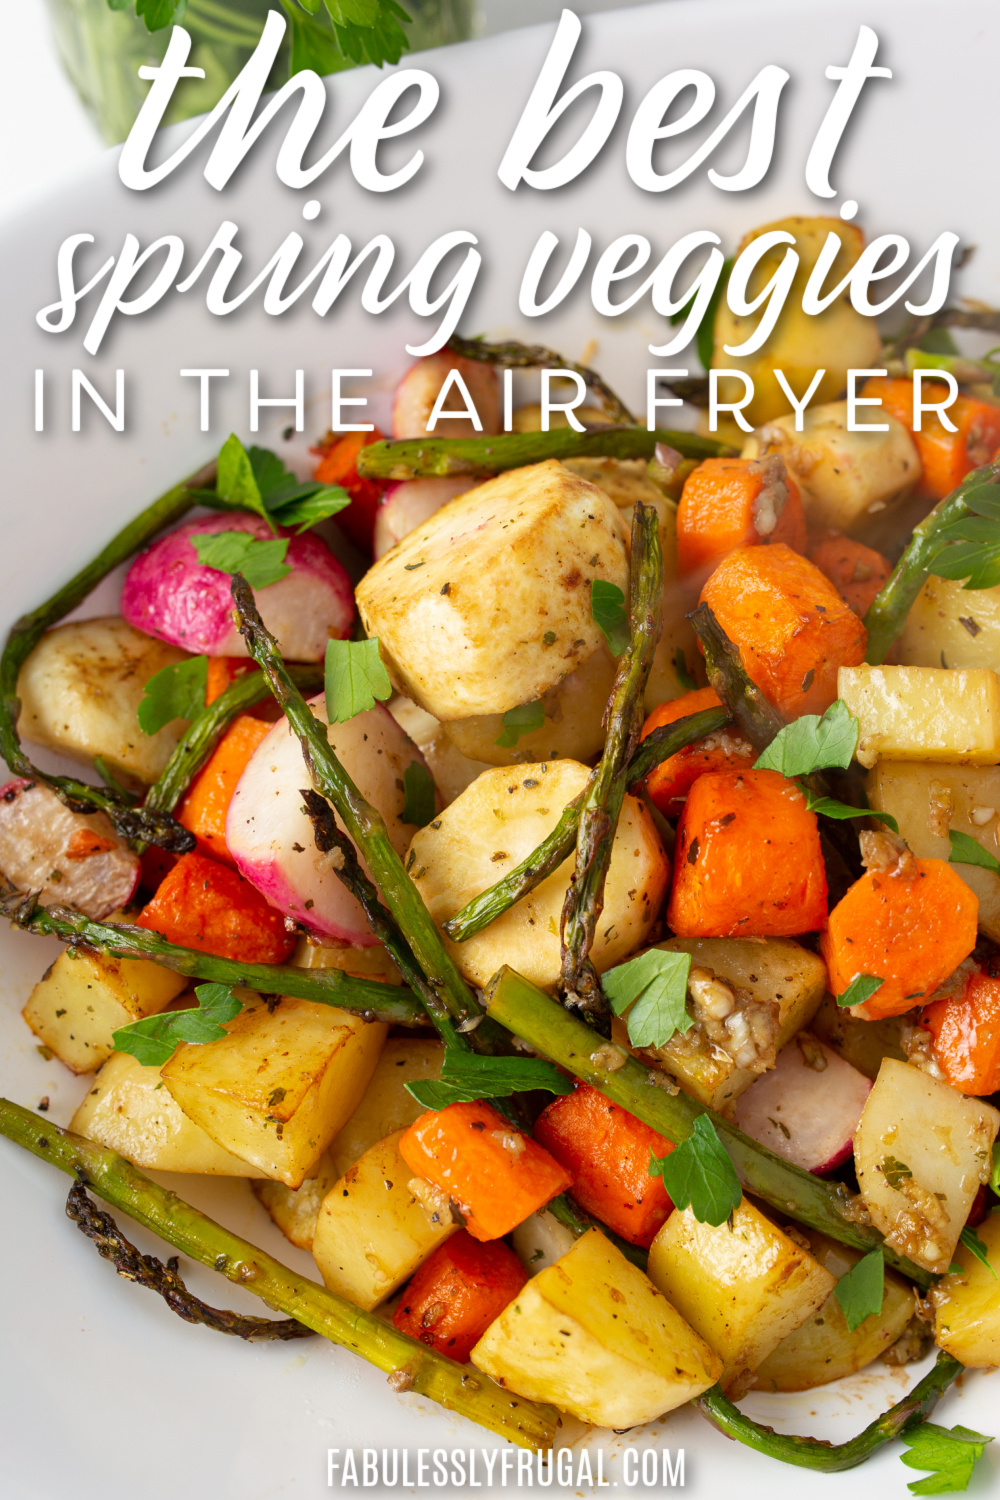 the best spring veggies in the air fryer